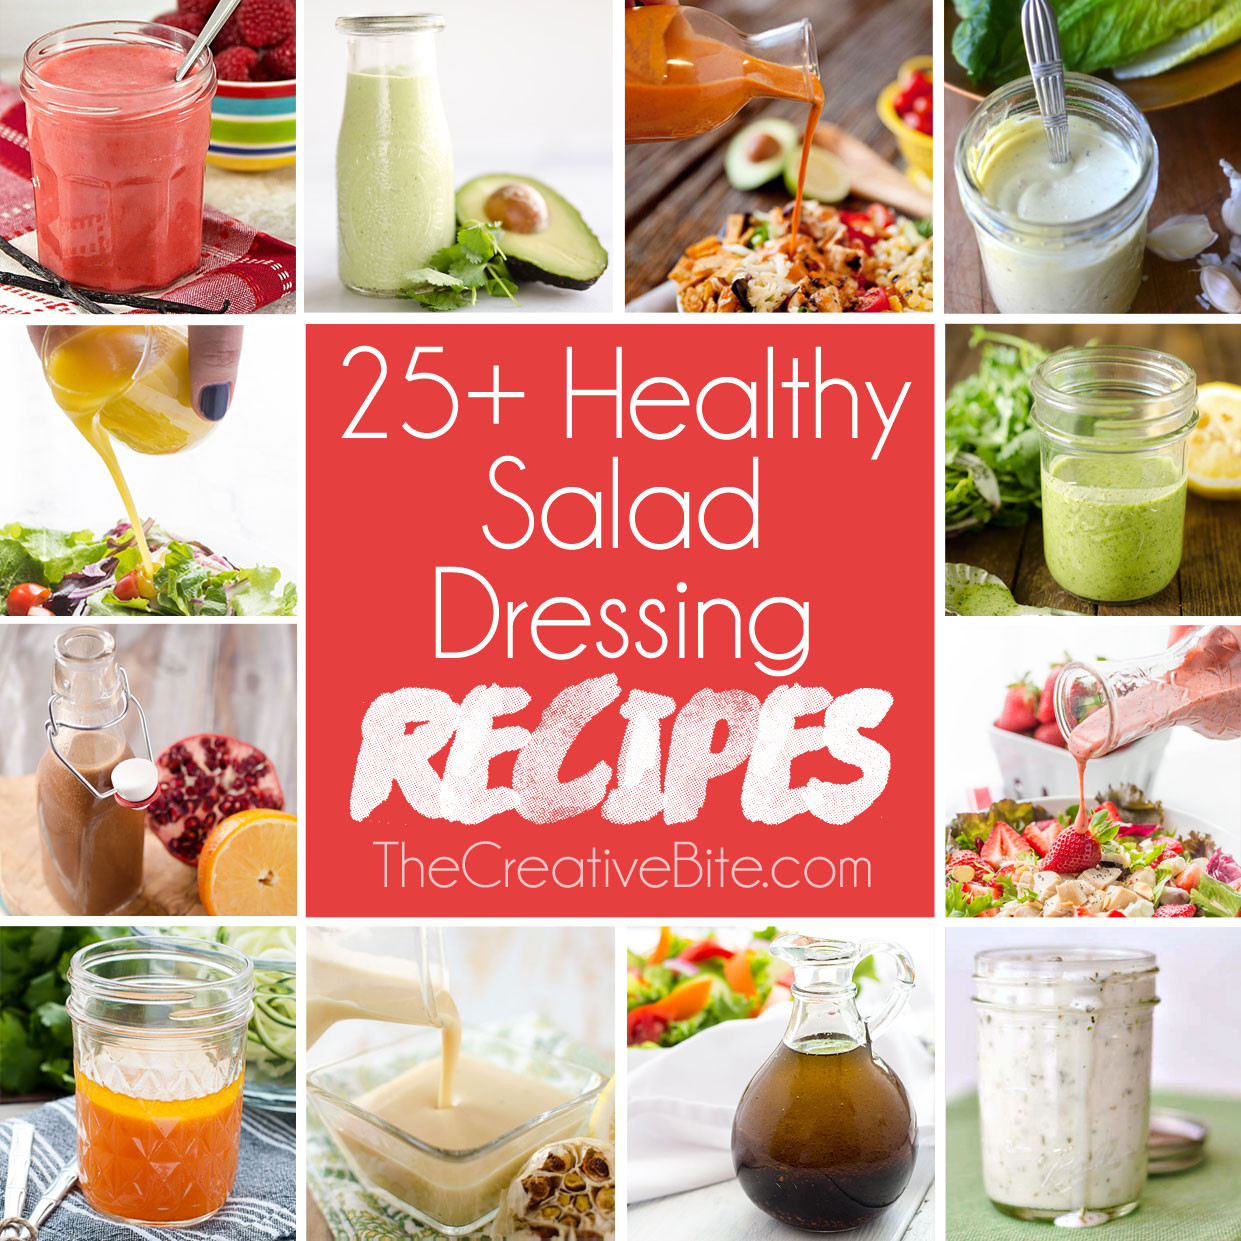 Salads Dressing Recipes Healthy
 Healthy Salad Dressing Recipes